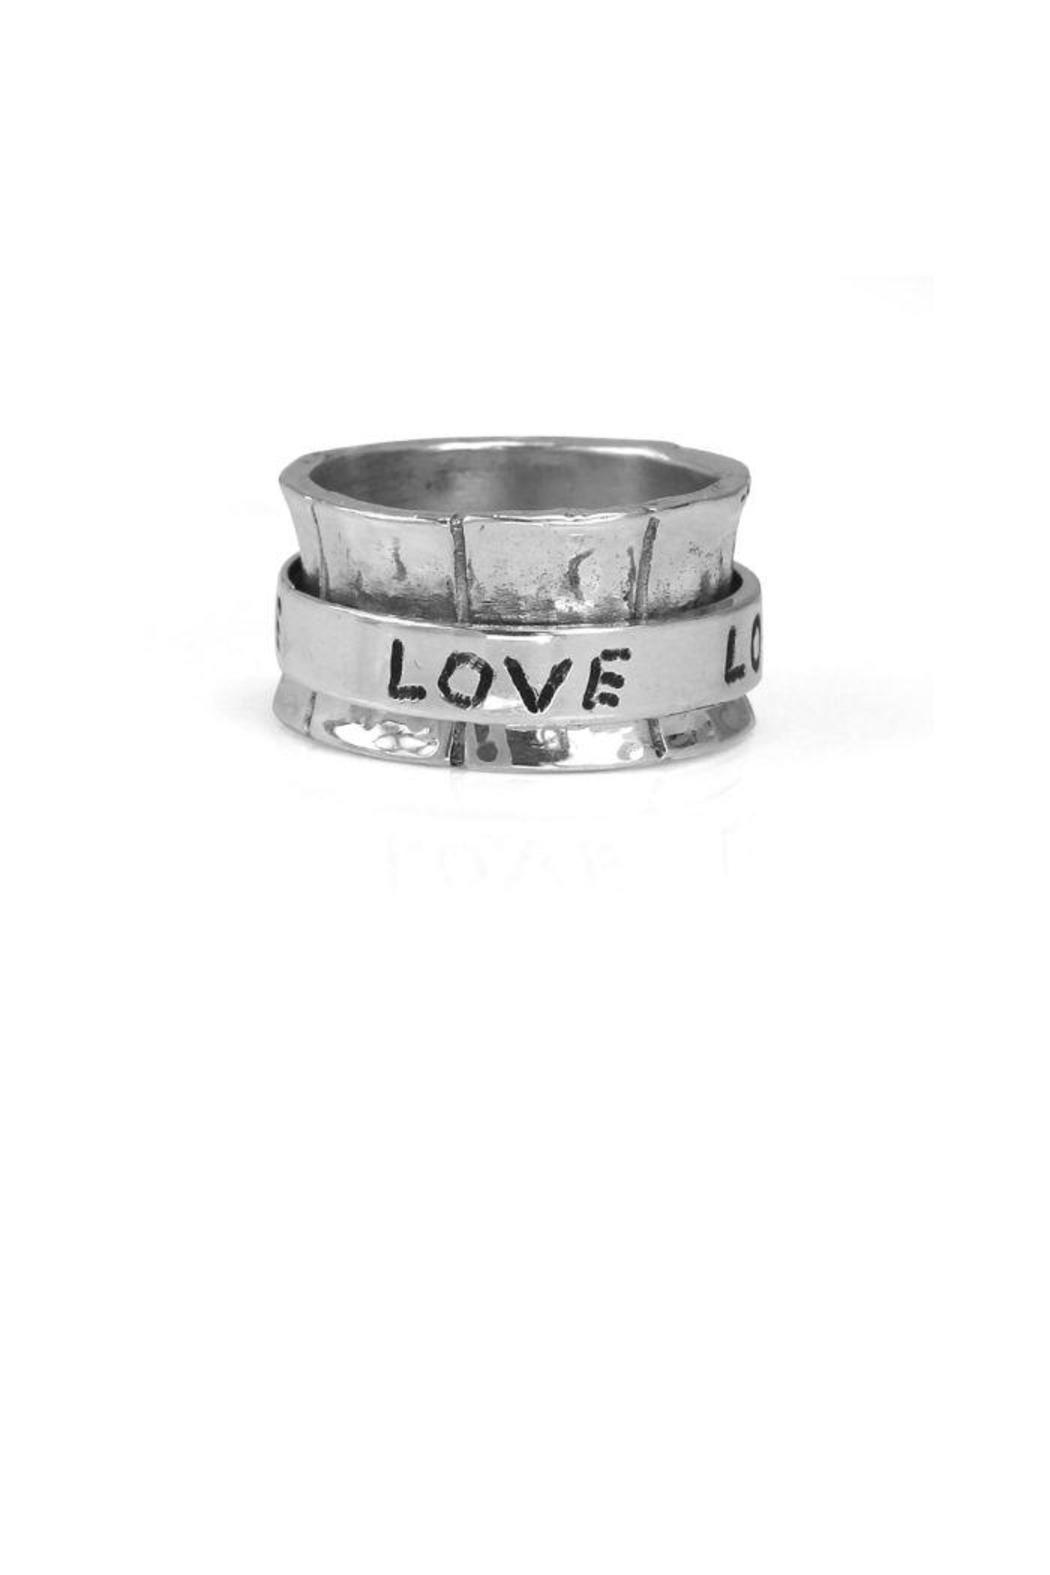 Love Meditation Ring. Sterling Silver. Size 9.